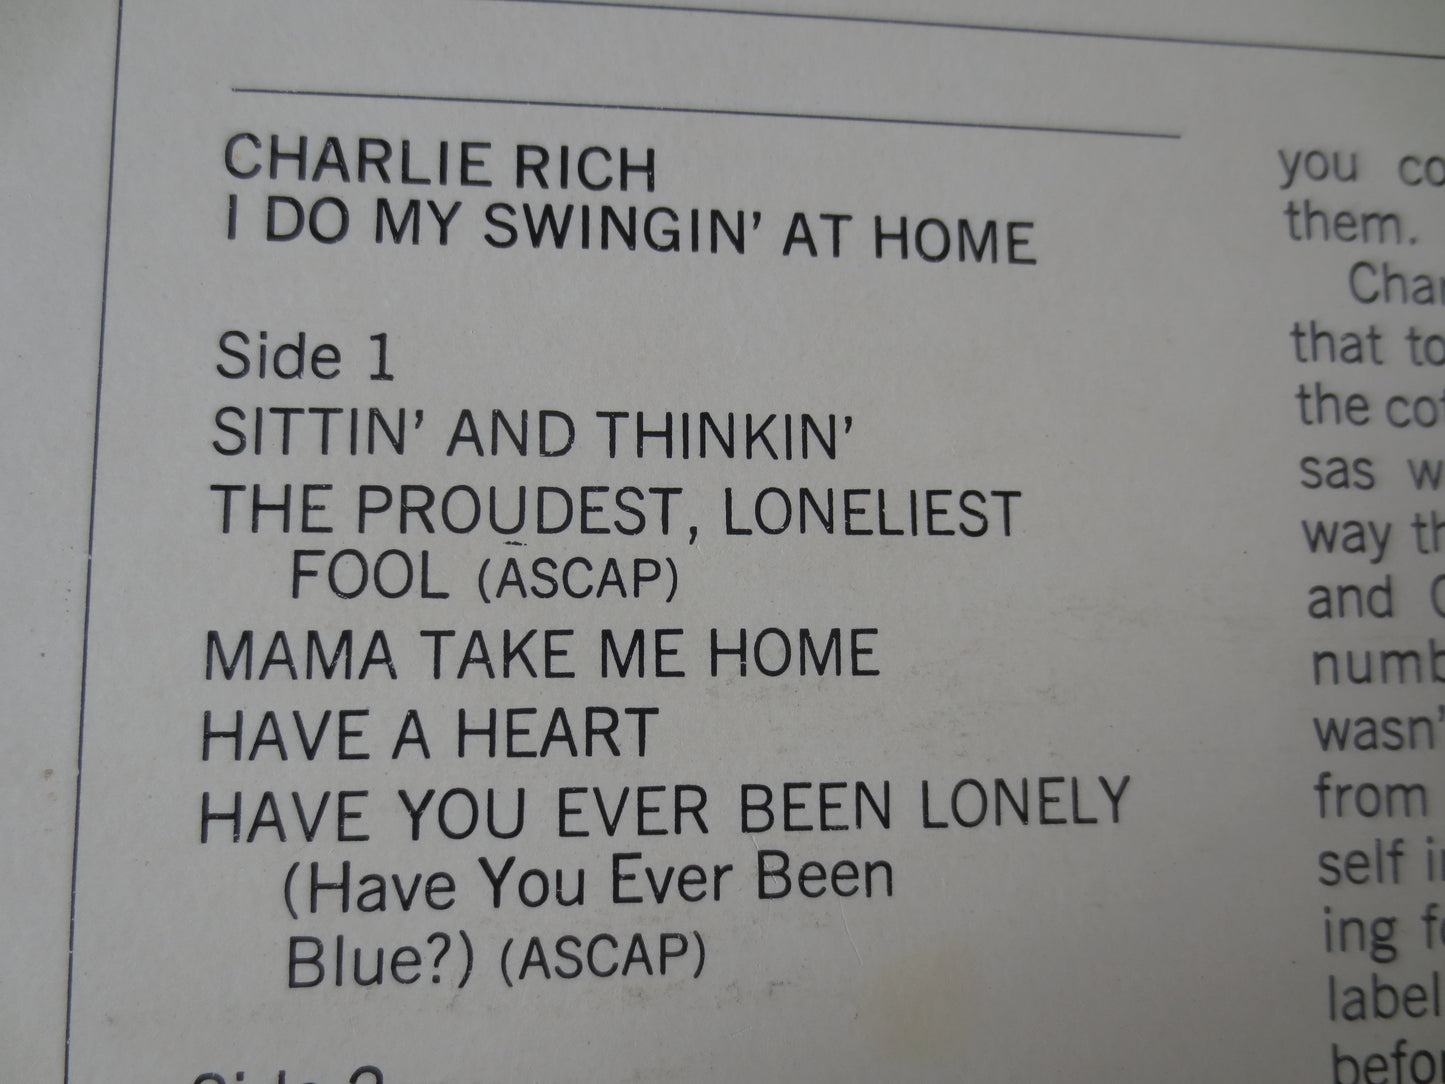 CHARLIE RICH Record, I Do My SWINGIN' At Home, Charlie Rich Albums, Charlie Rich Vinyl, Charlie Rich, Vinyl, 1973 Records